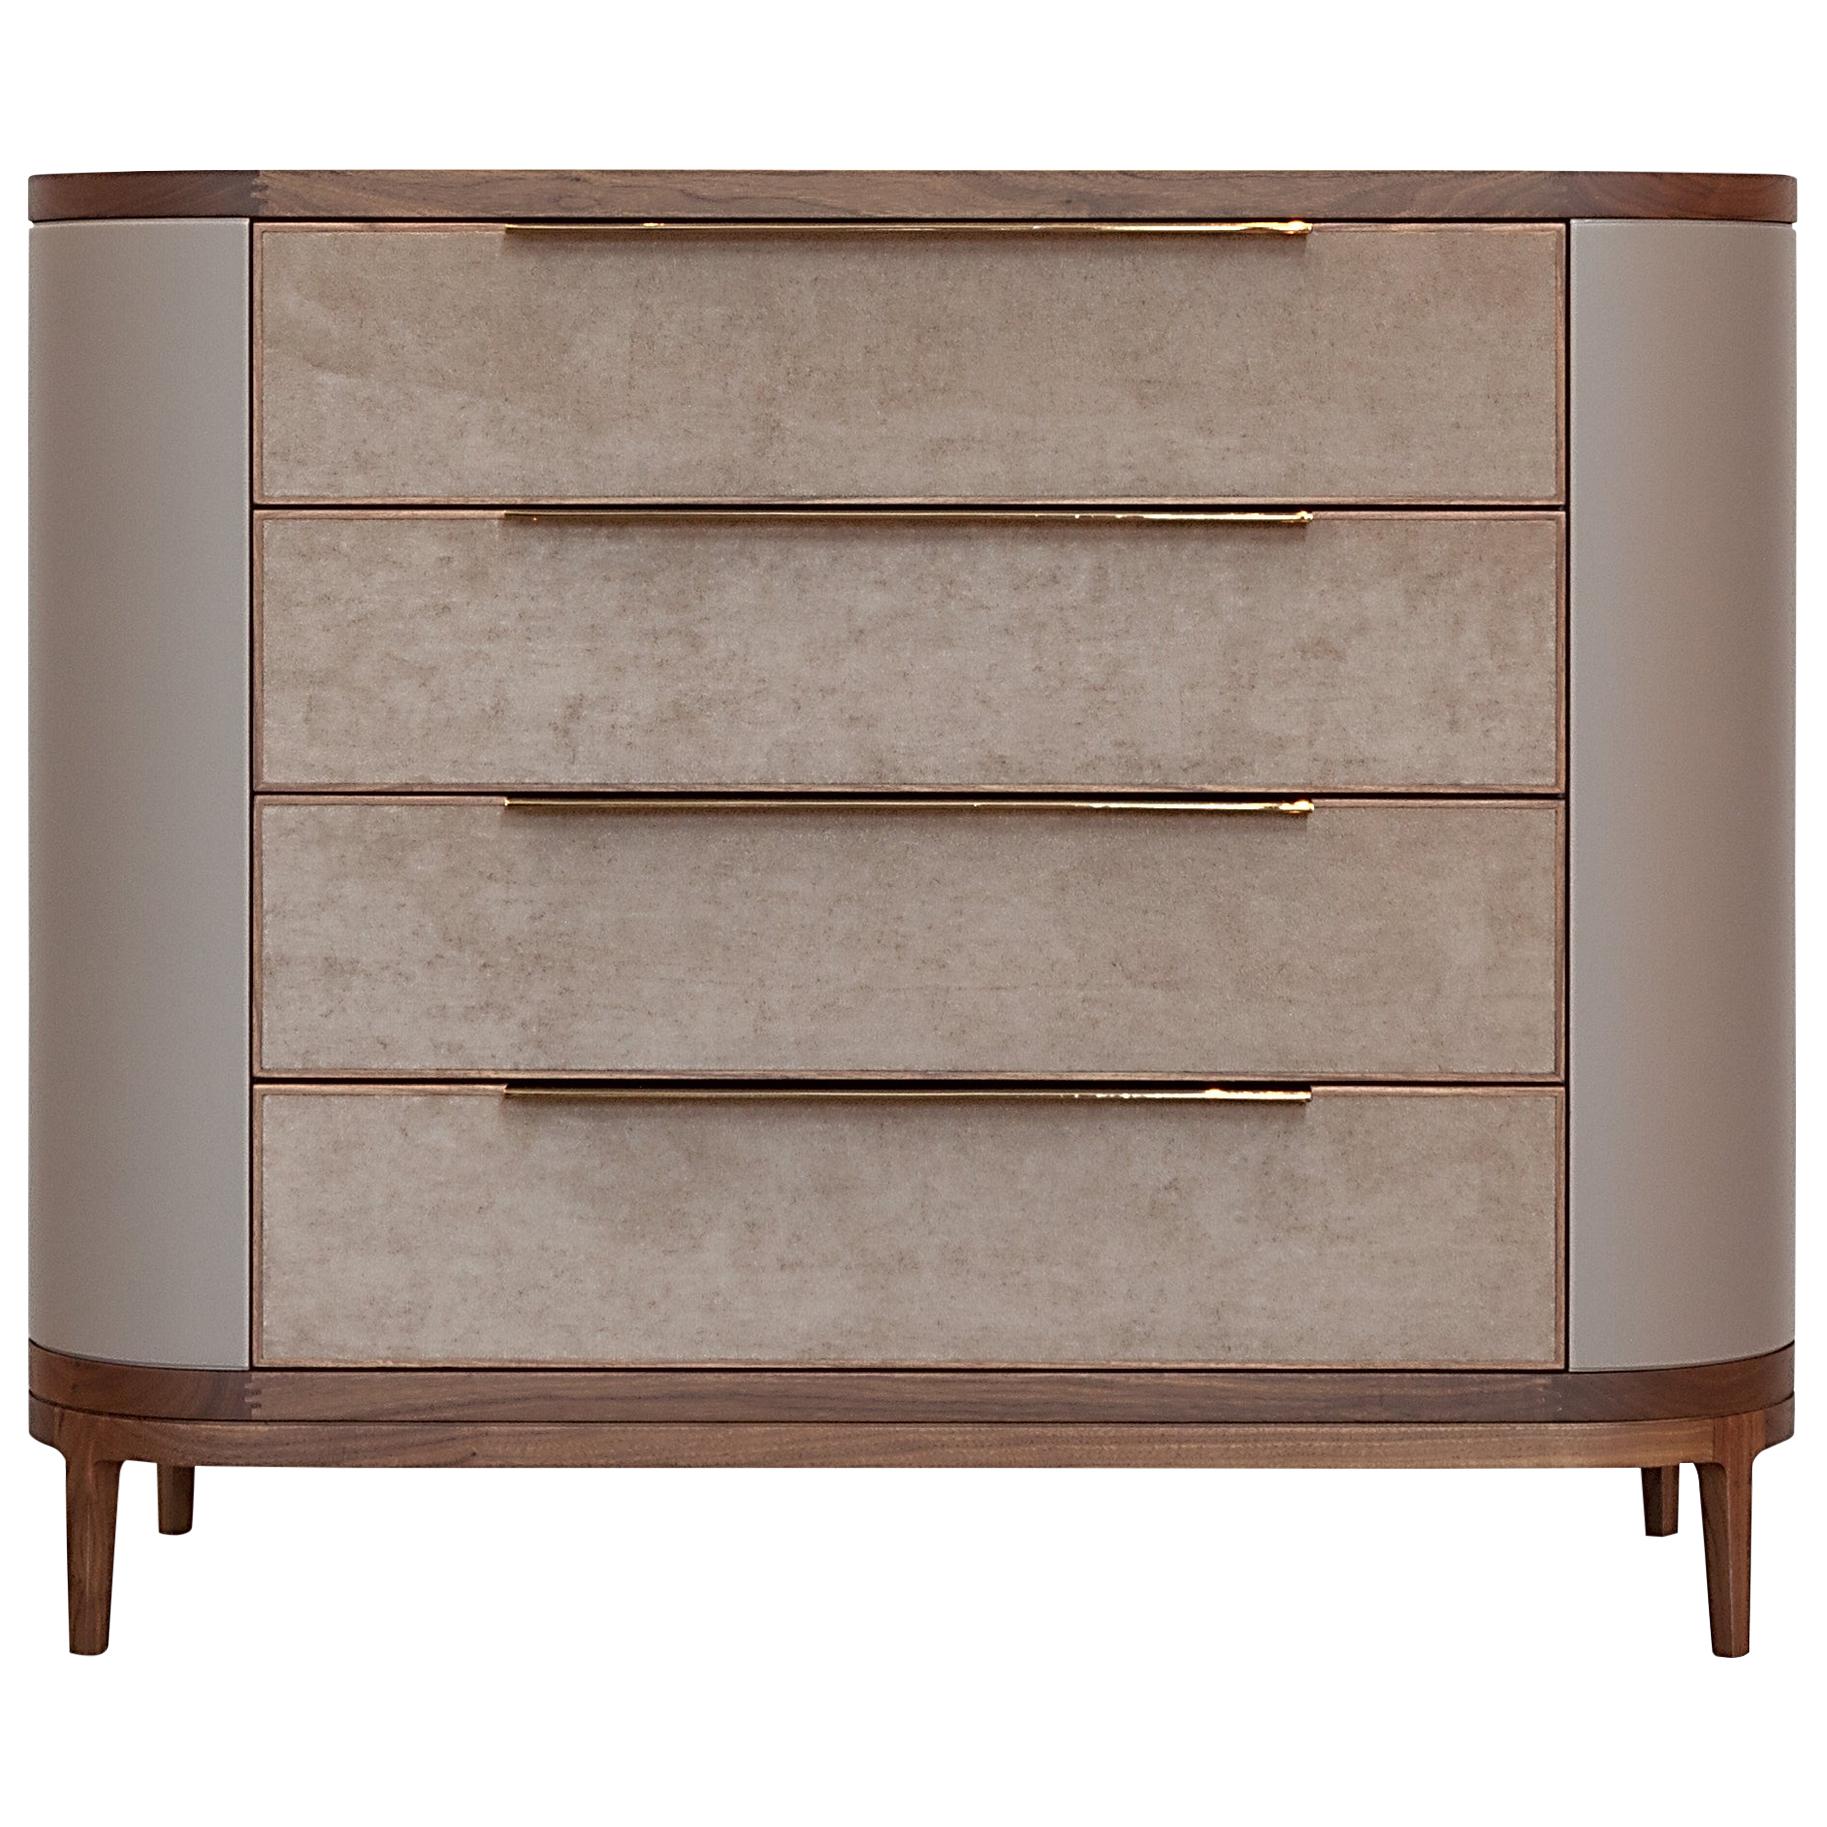 Manhattan Dresser, Fully Upholstered in Leather, Wood, Metal Dresser